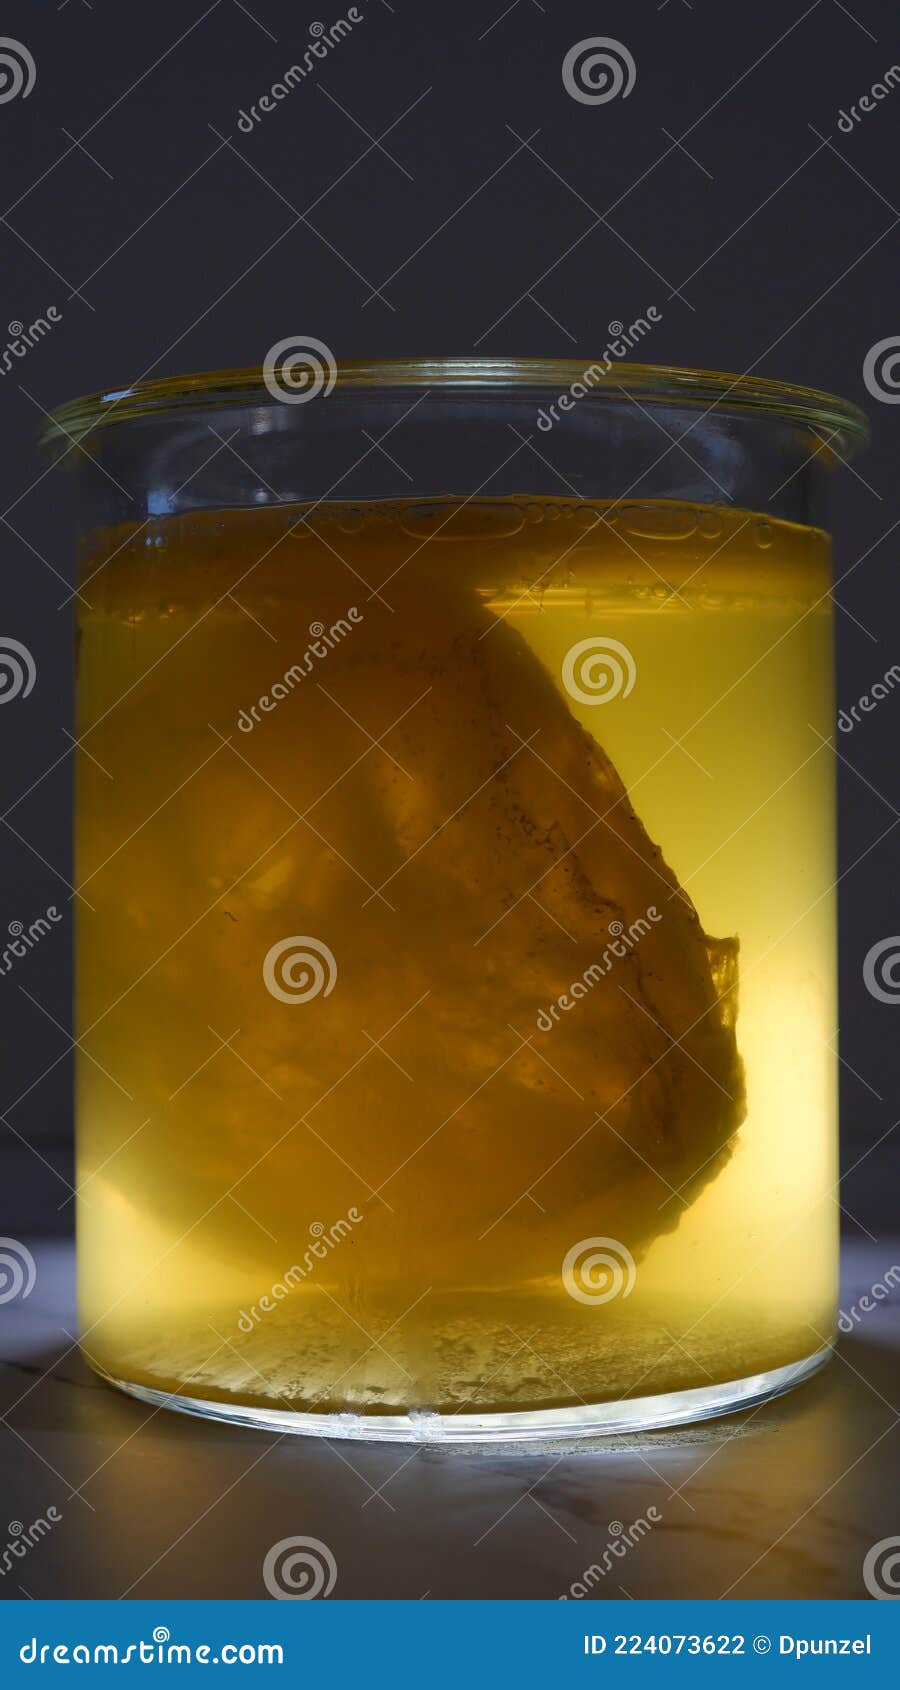 kombucha scoby its fermenting in a glass